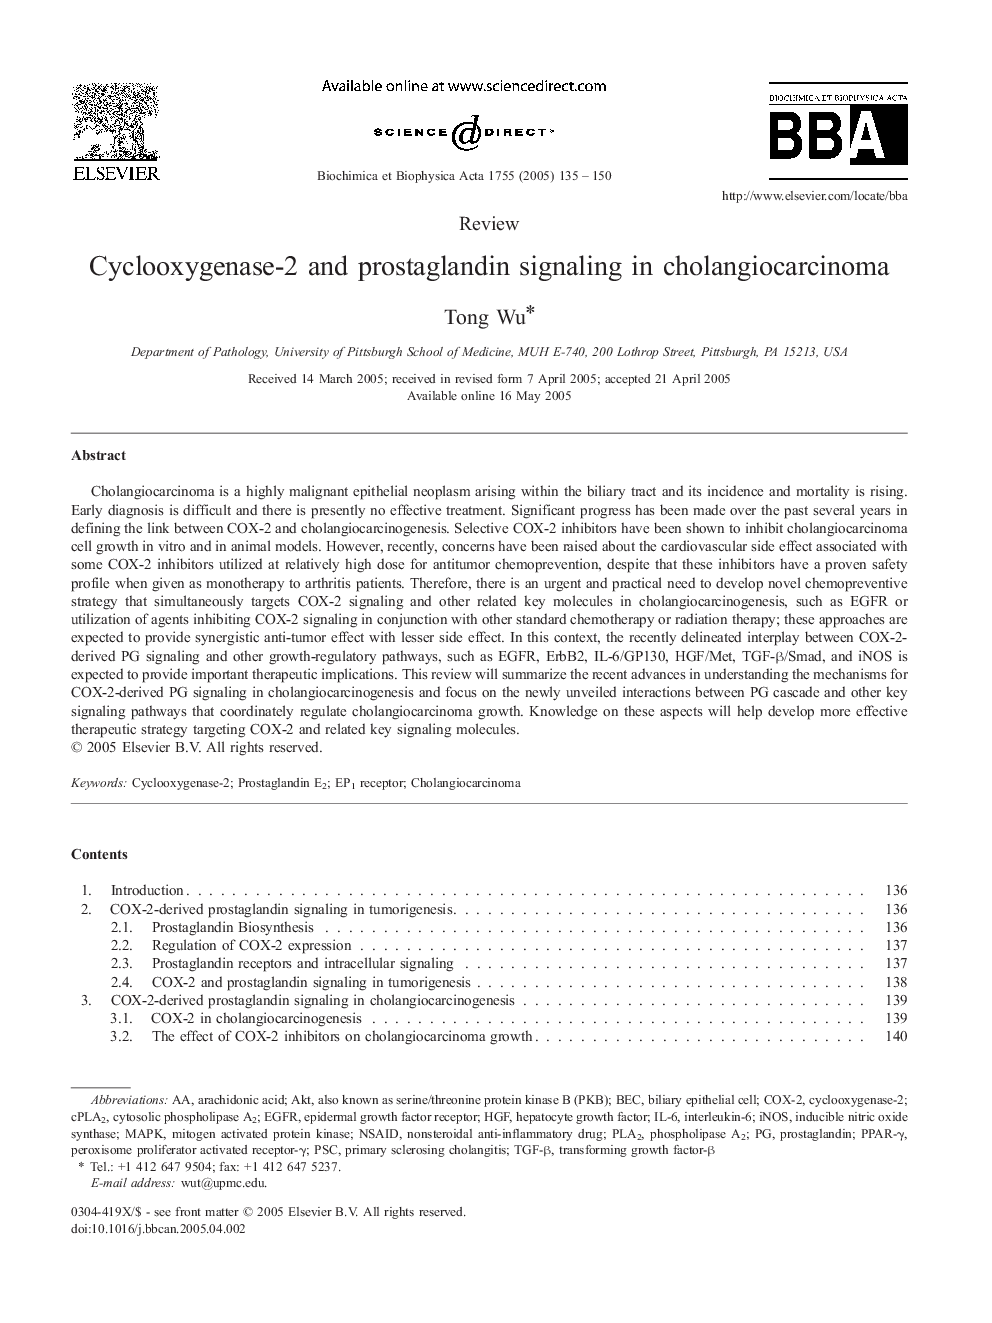 Cyclooxygenase-2 and prostaglandin signaling in cholangiocarcinoma